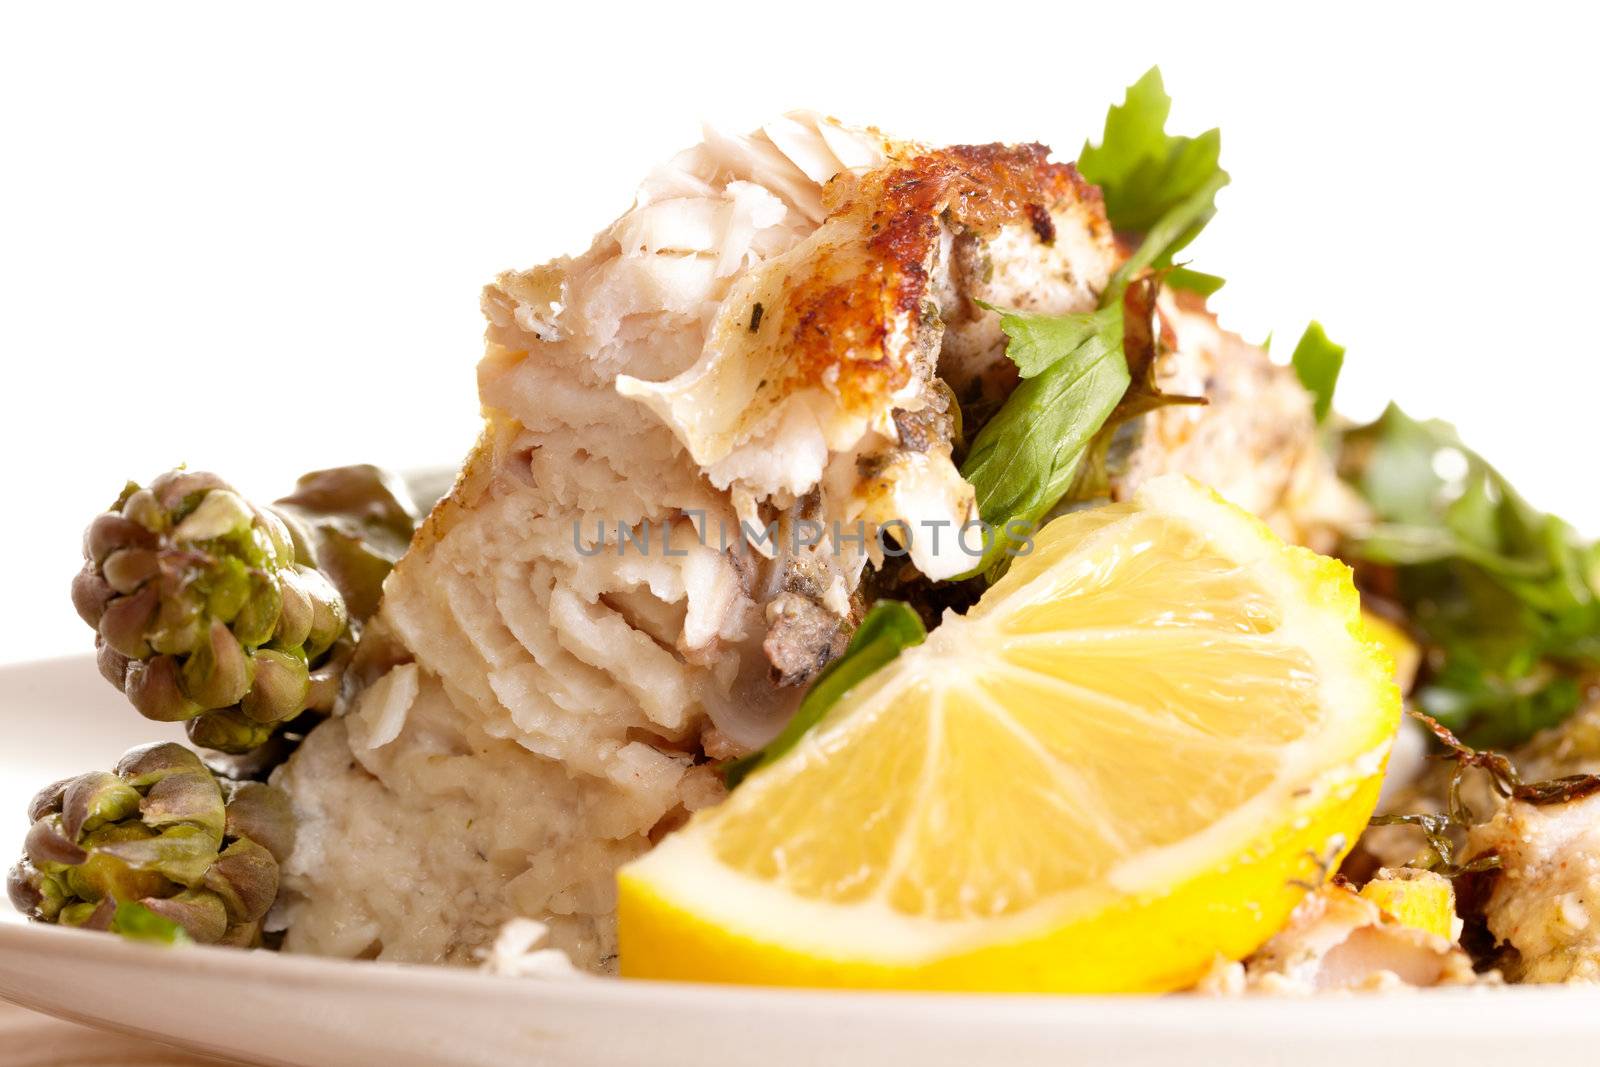 Fish dish with asparagus, greens and lemon.